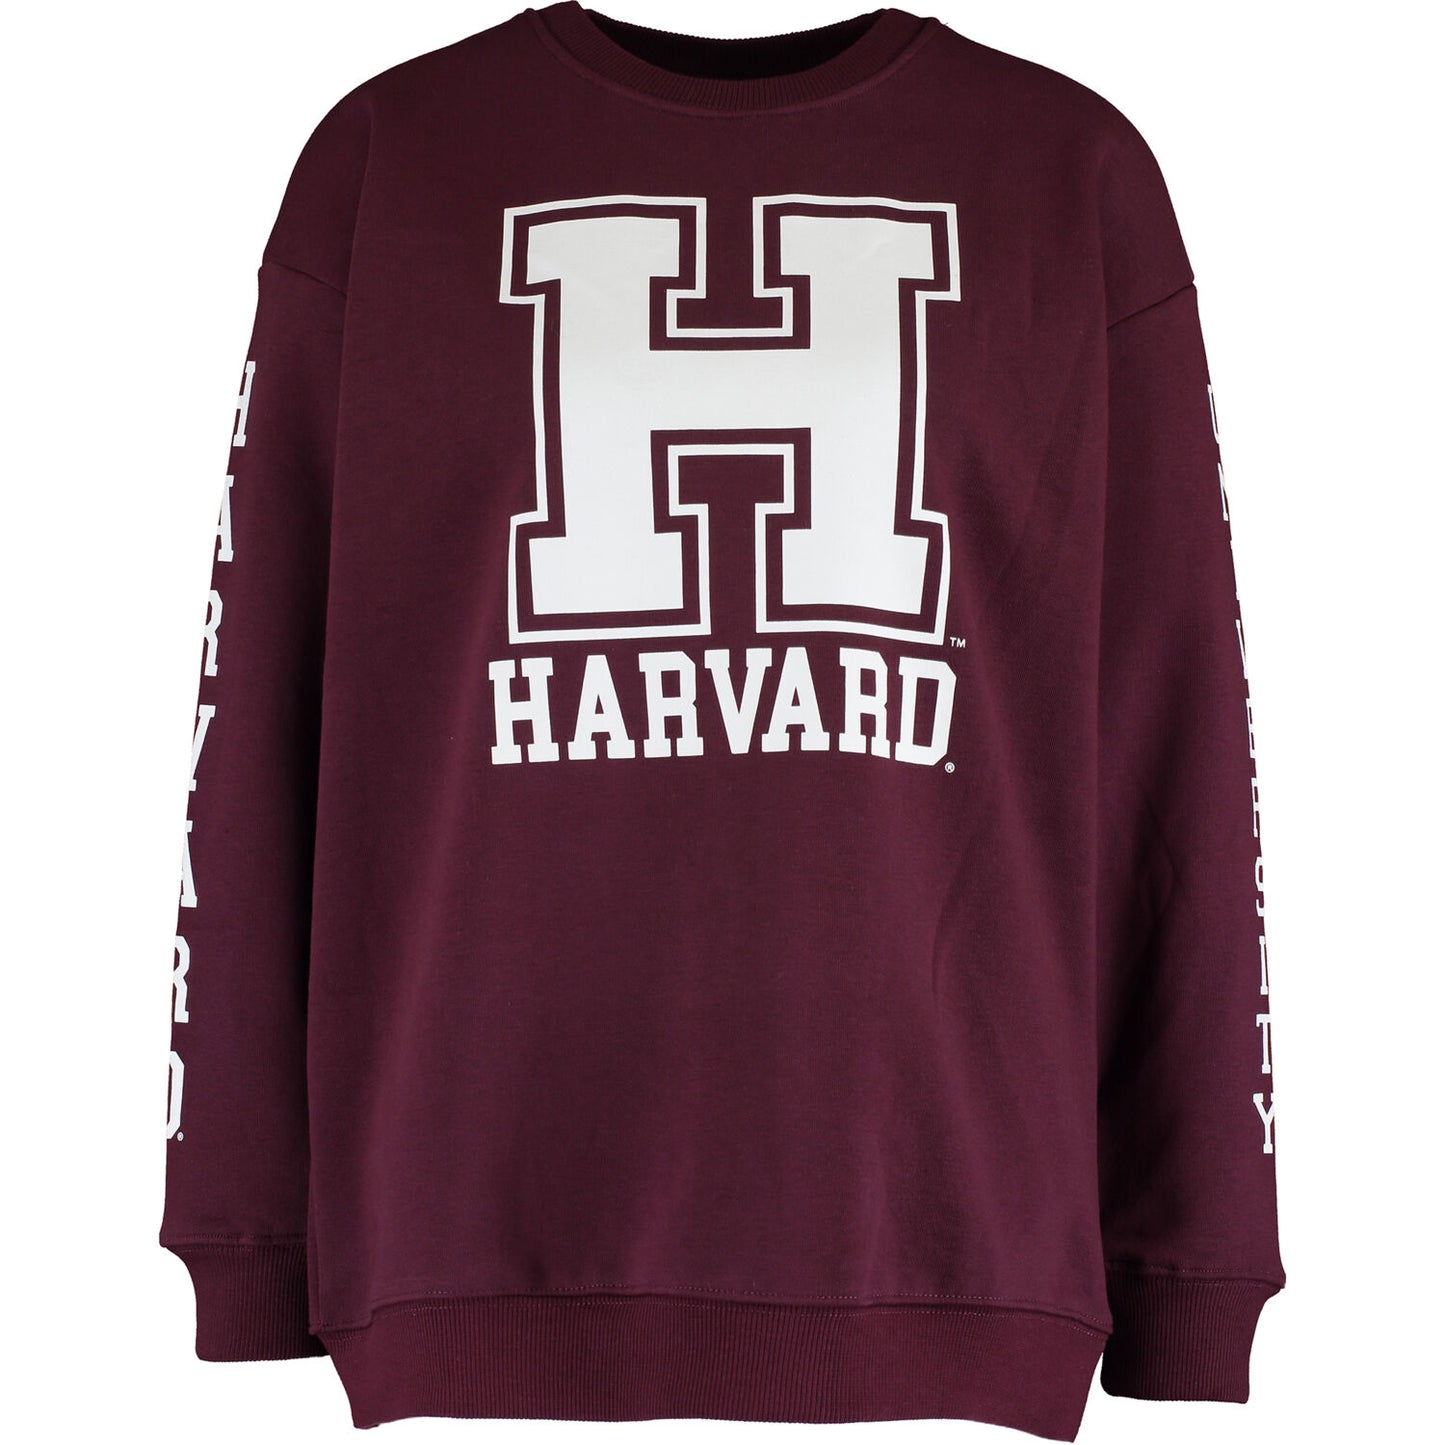 Harvard - Logo & Sleeve print Womens Boyfriend Crew Sweat